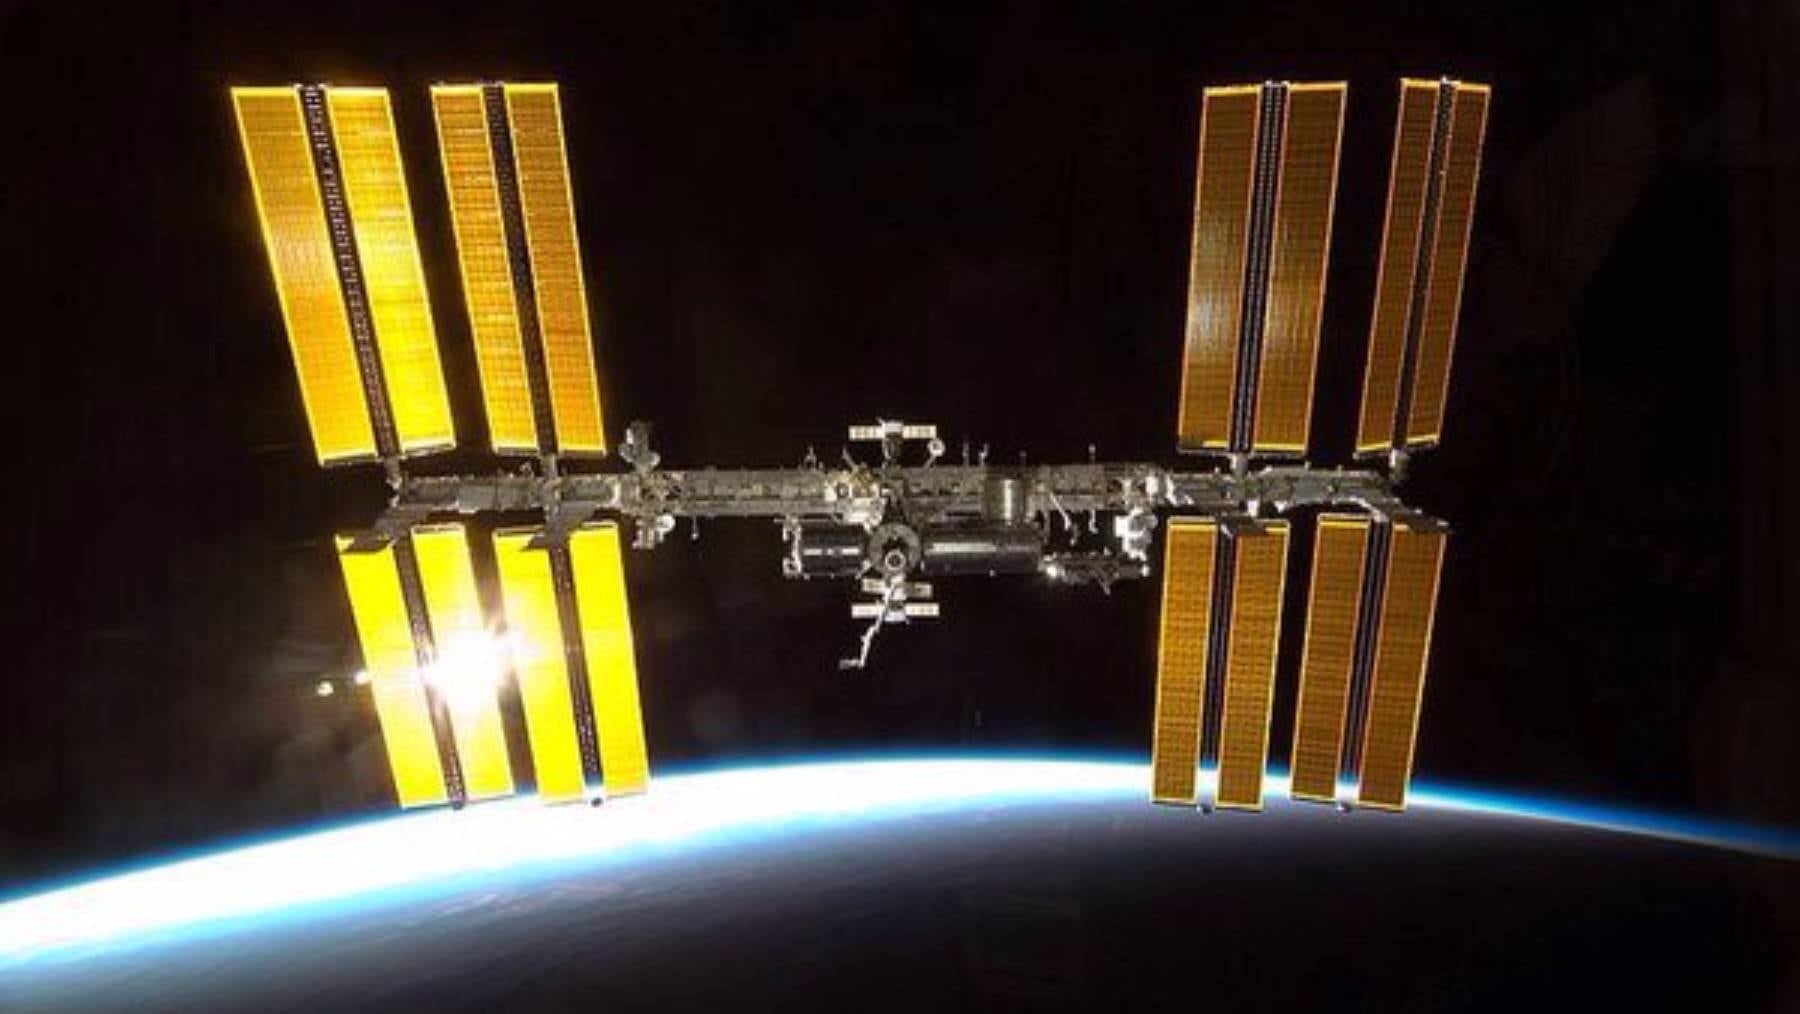 Estación Espacial Internacional